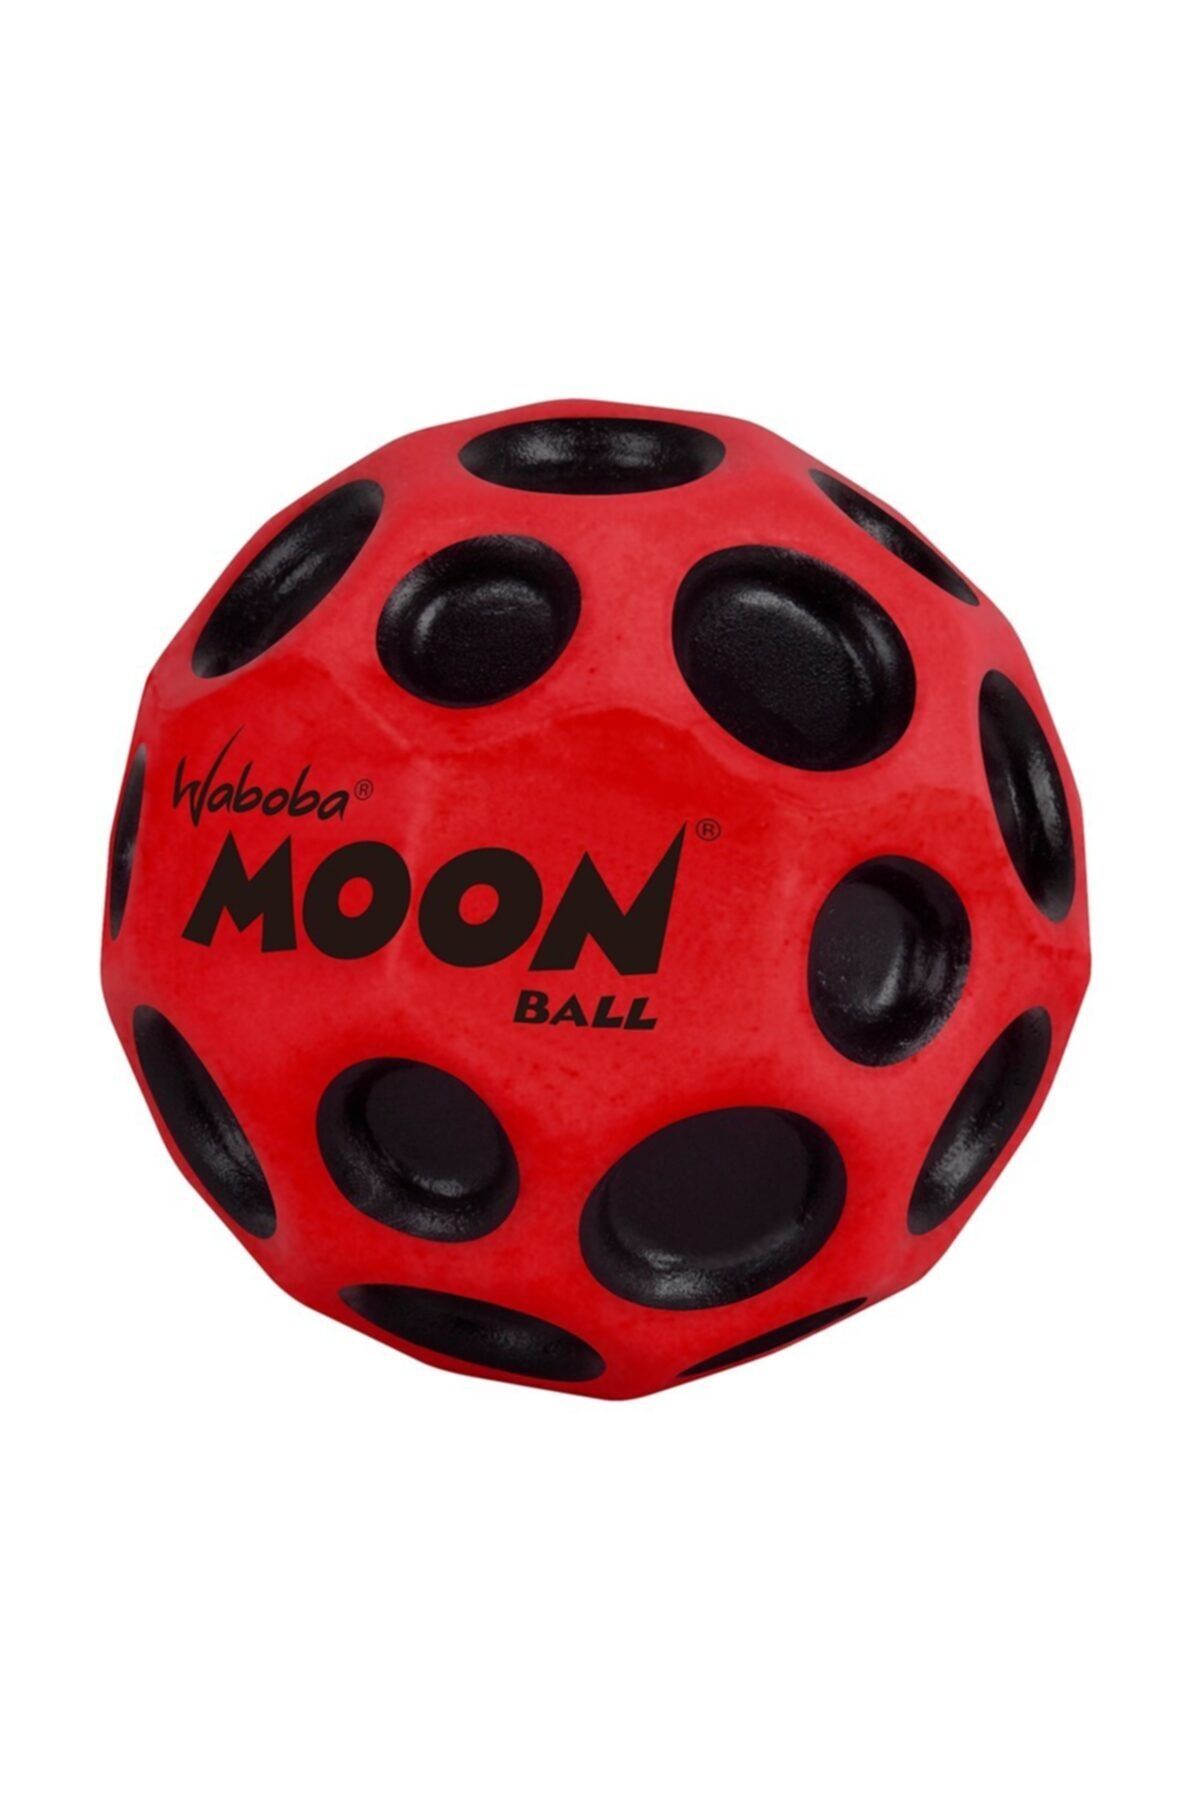 Balls rng. Мяч Waboba Ball Moon. Bounce Ball. Roller Ball 5 Ball Bounce Version 1.2. Вабоба.